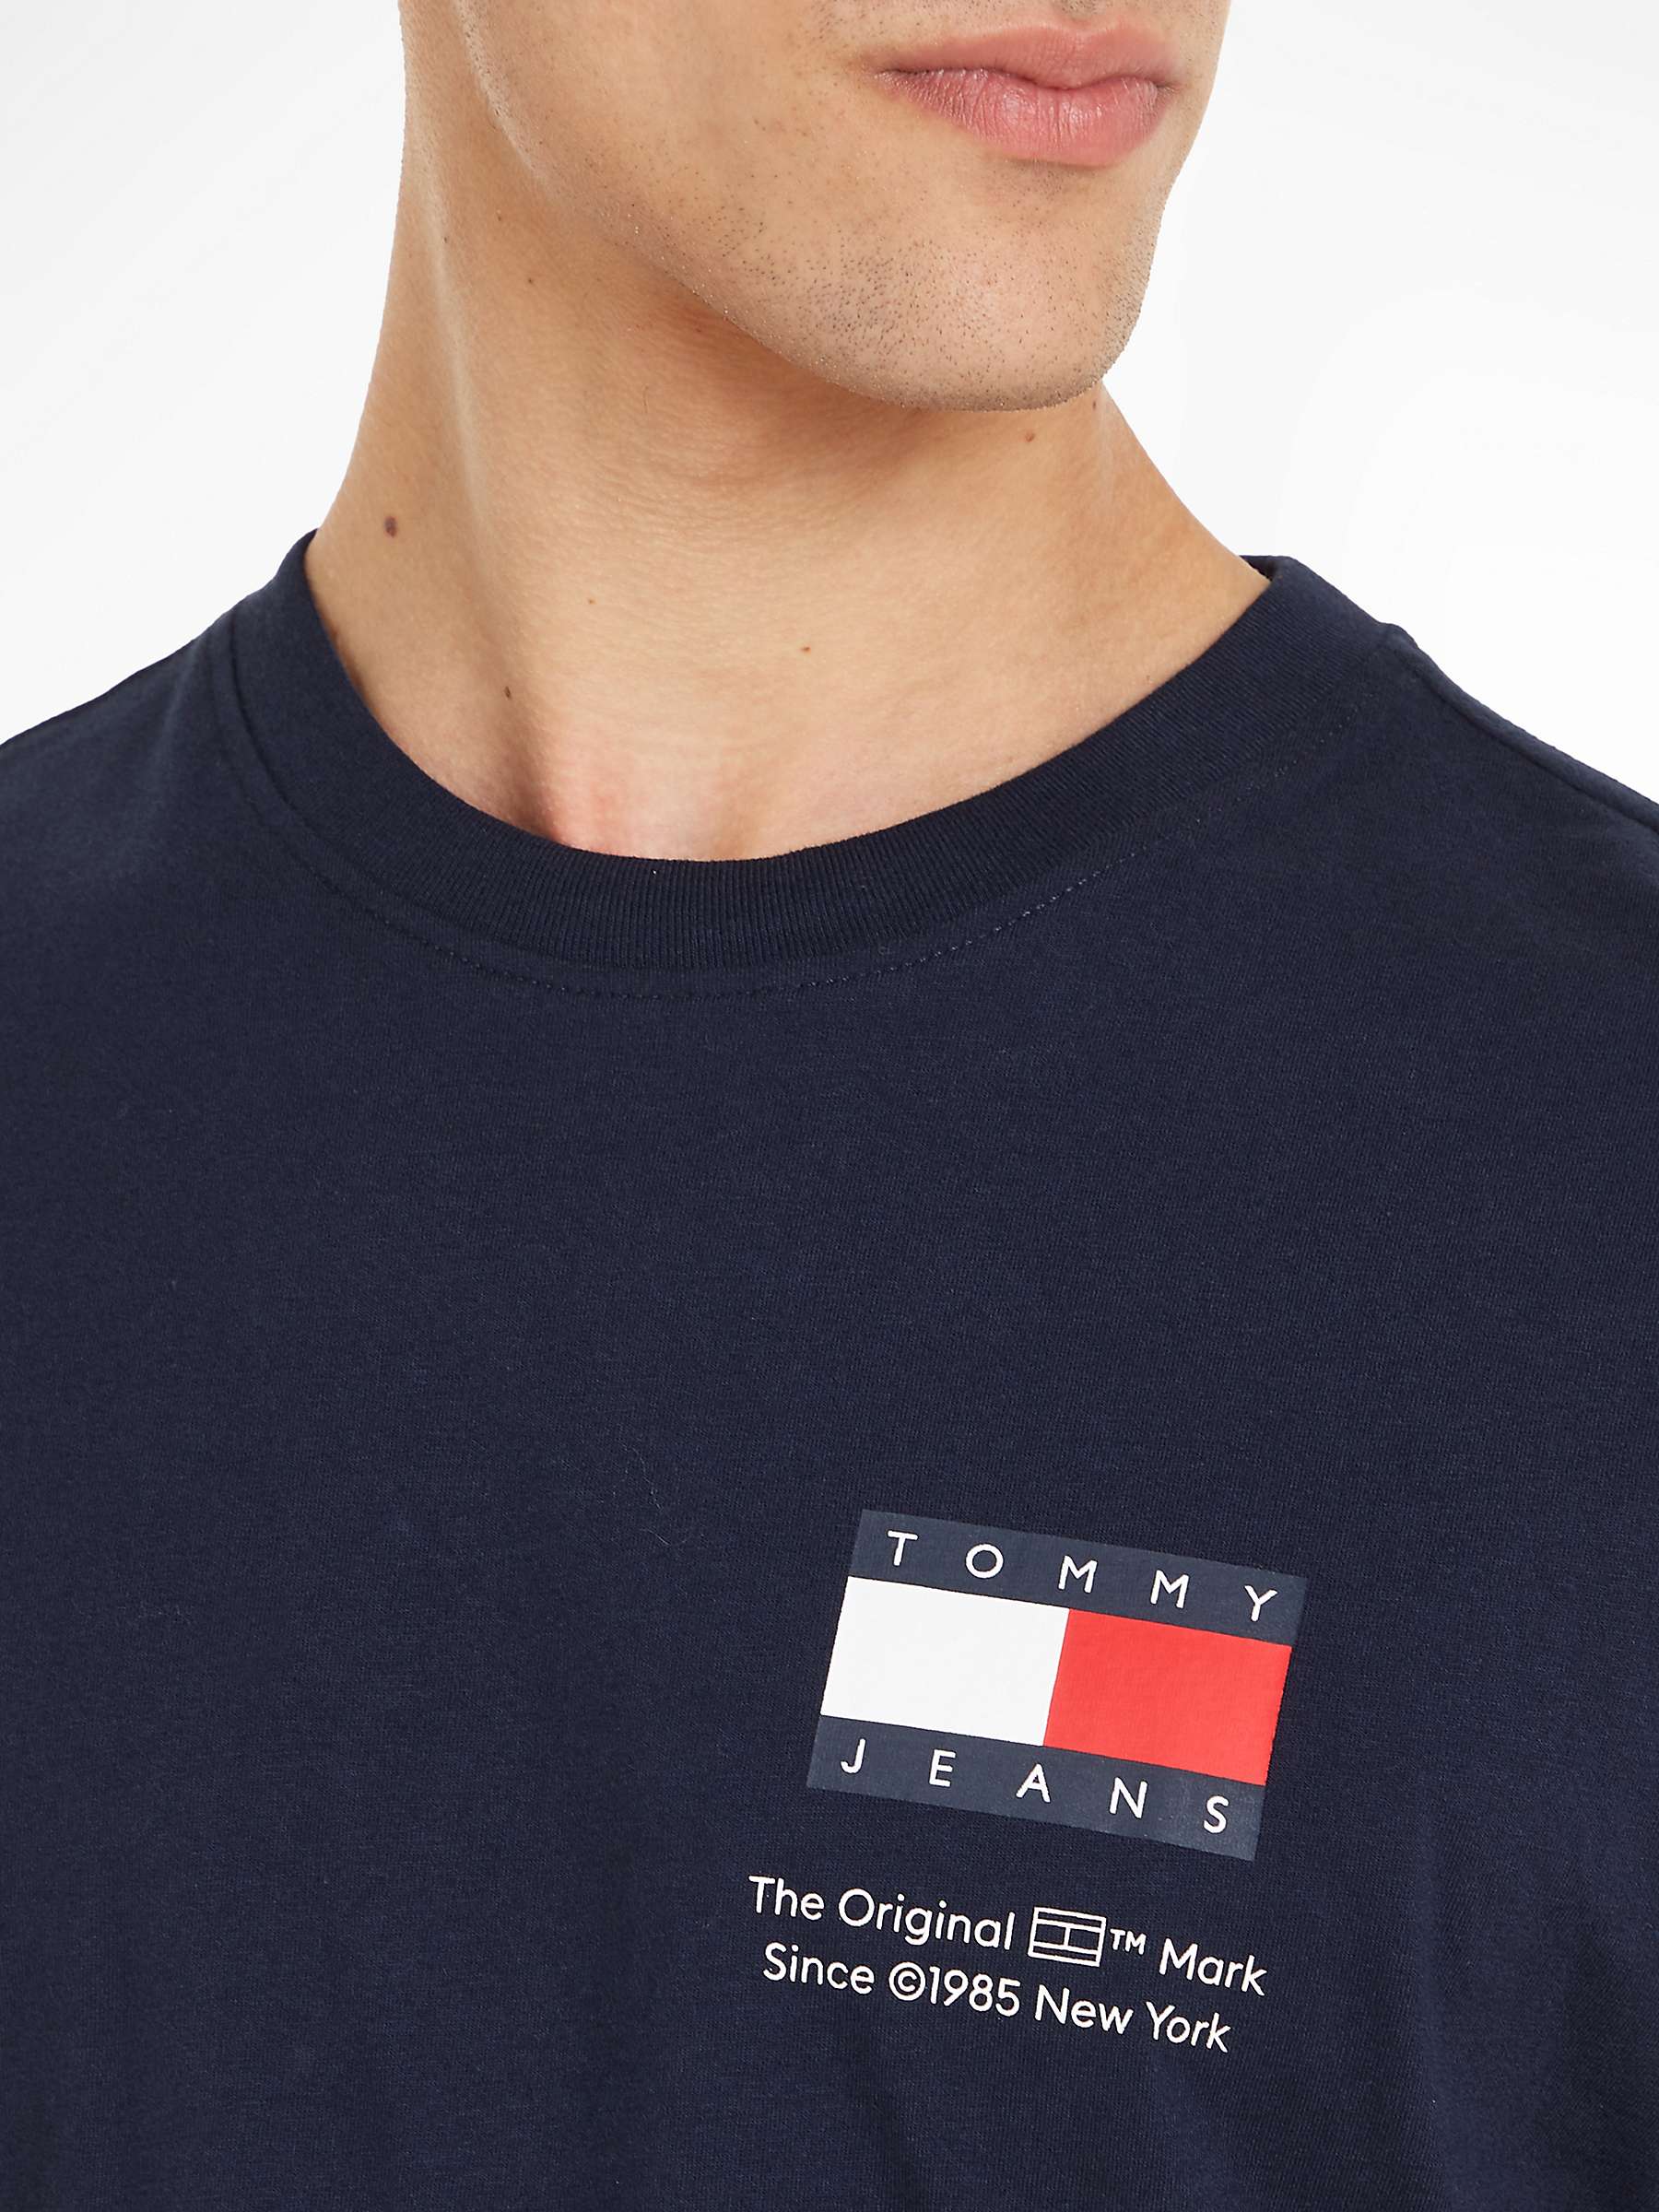 Tommy Jeans Slim Essential Flag T-Shirt, Dark Navy at John Lewis & Partners